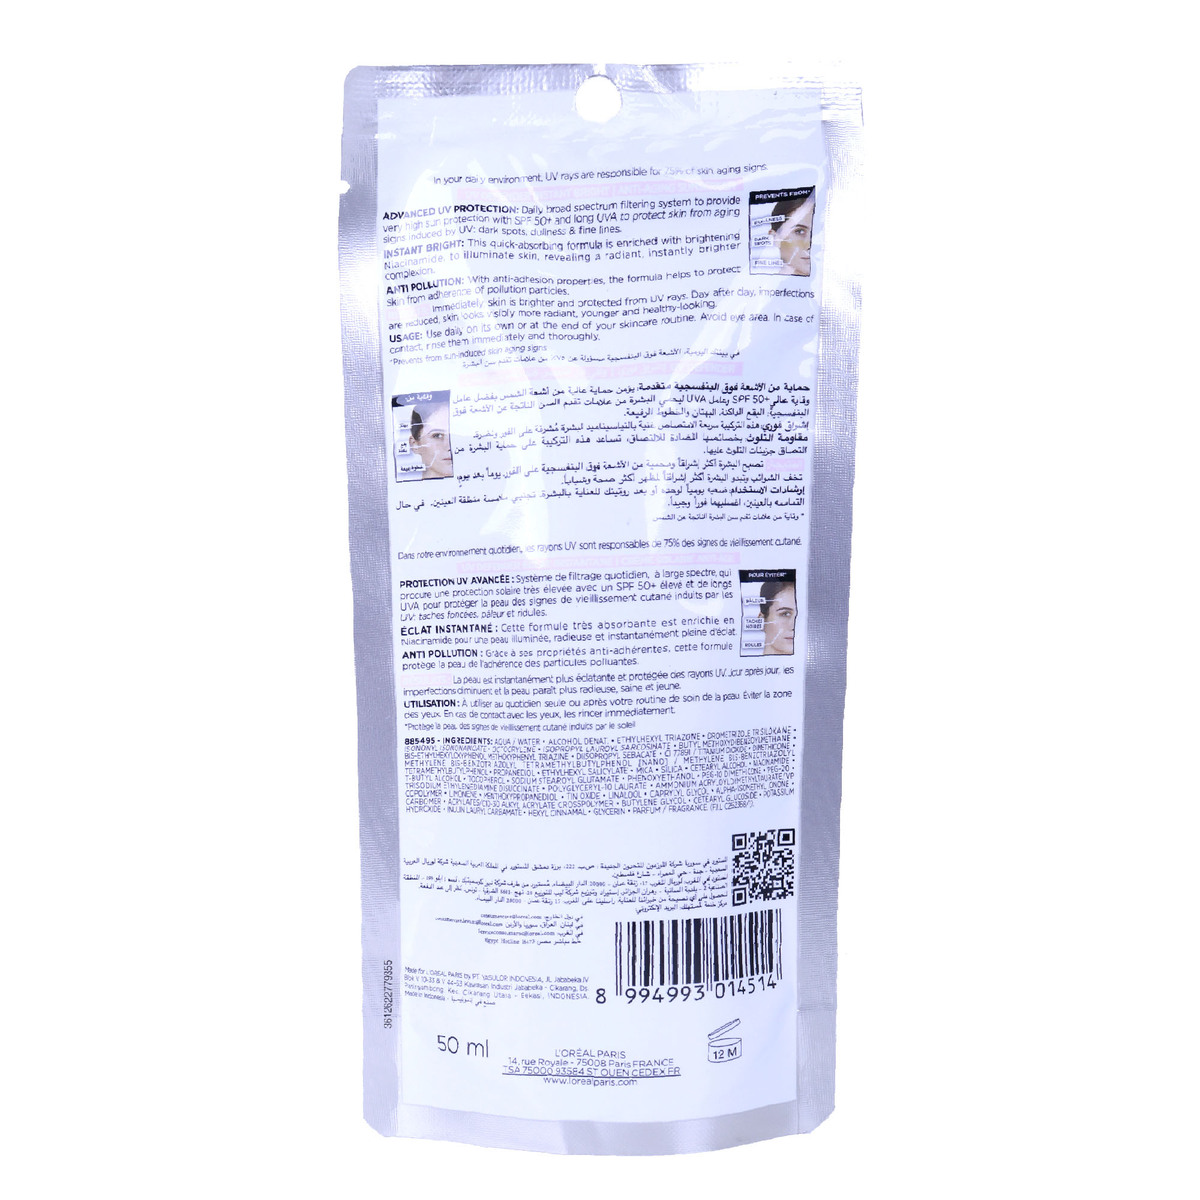 L'Oreal Paris UV Defender Anti-Aging Sunscreen SPF 50+ Brightening 50 ml